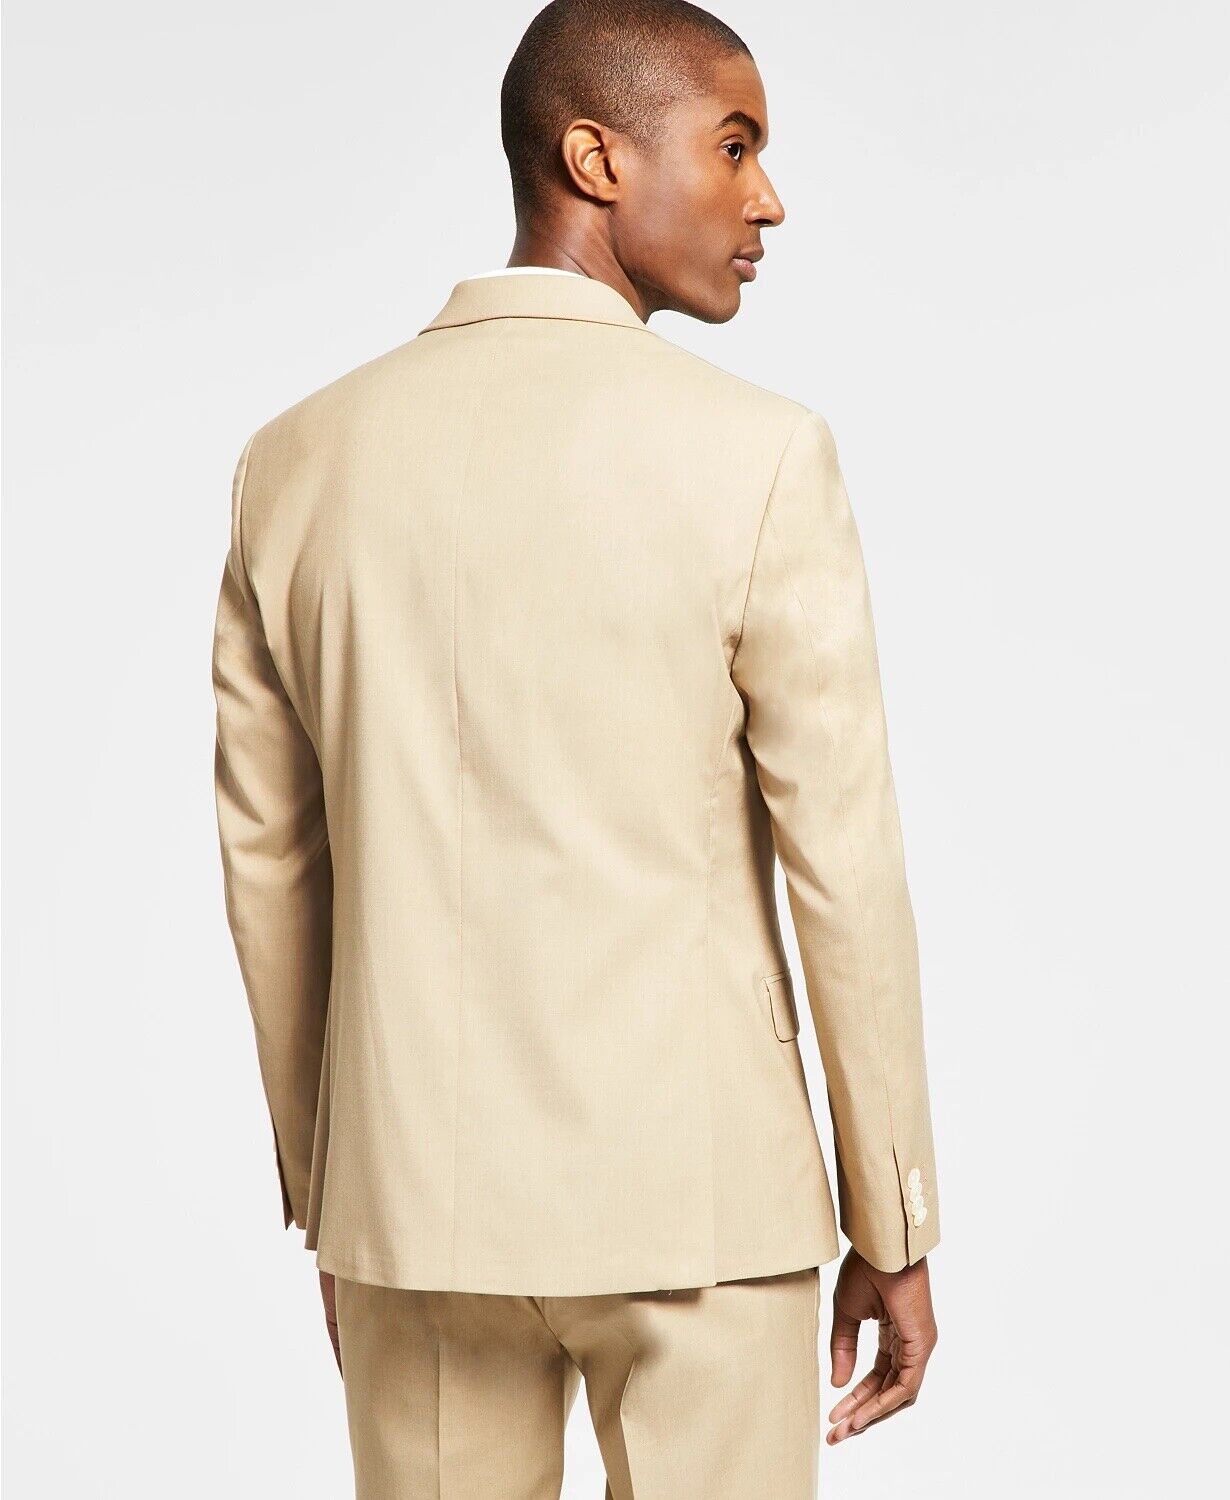 Alfani Men's Slim-Fit Stretch Solid Suit Jacket Caramel Brown 38L